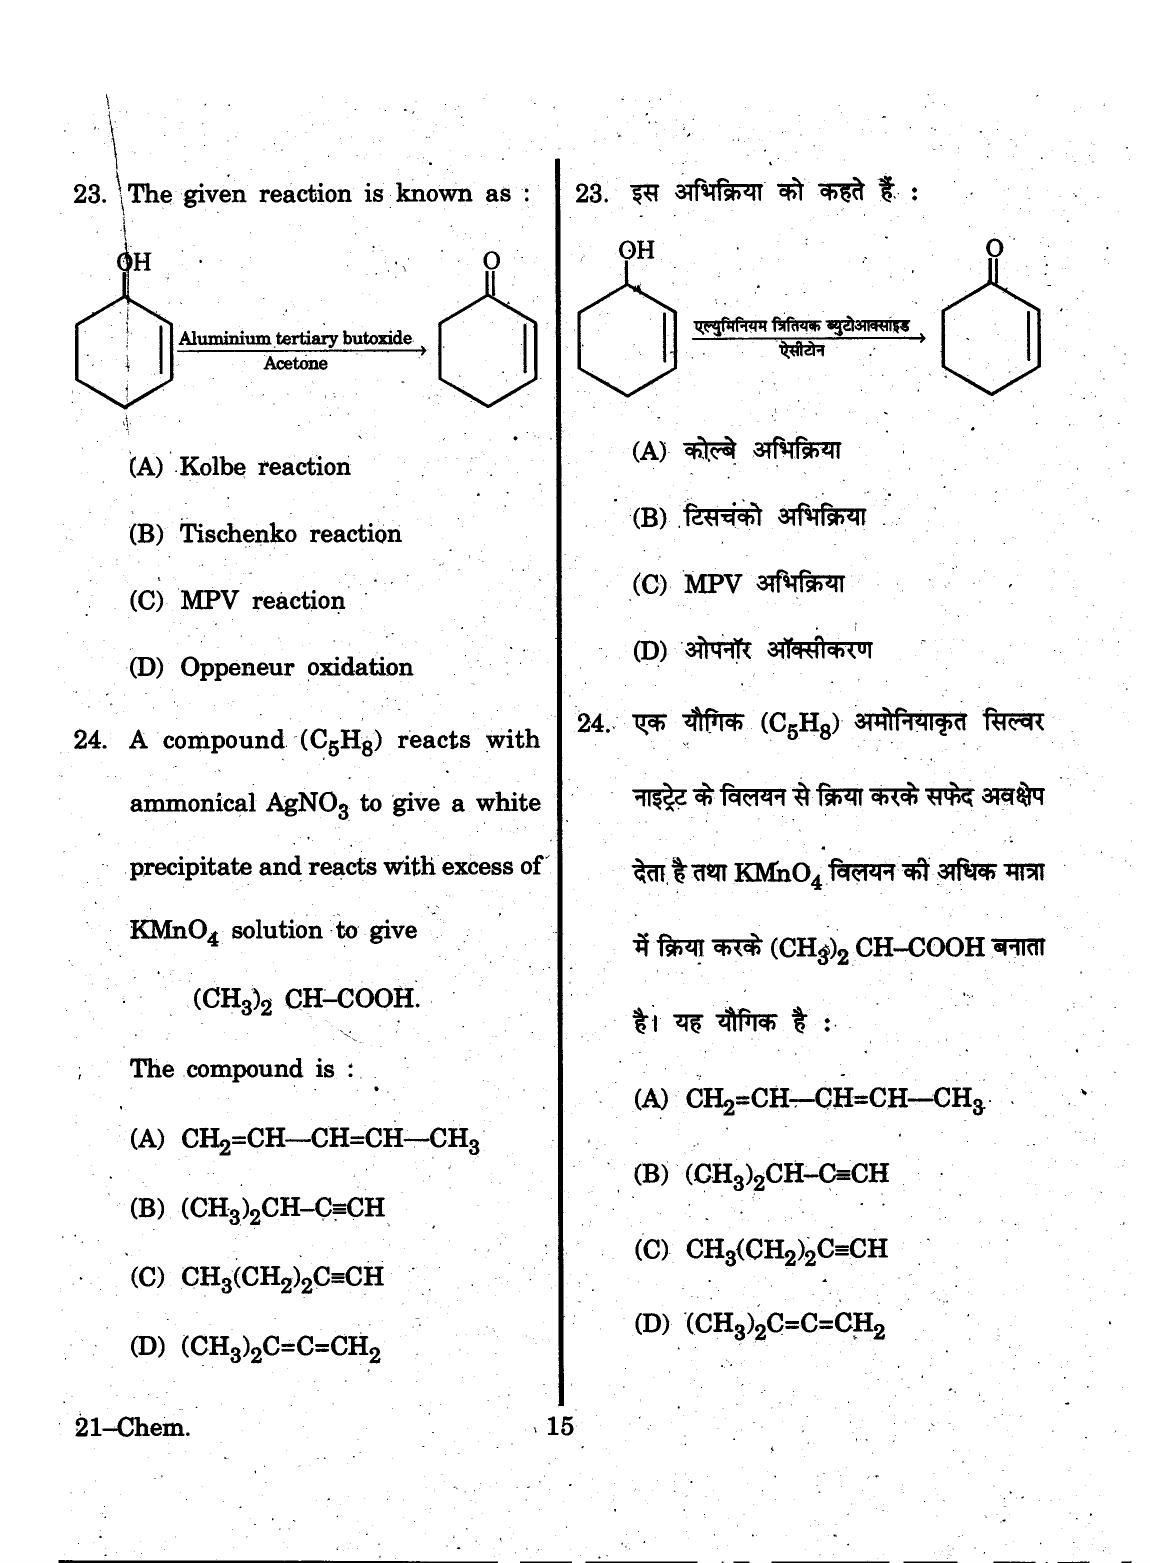 URATPG 2015 Chemisty Question Paper - Page 15